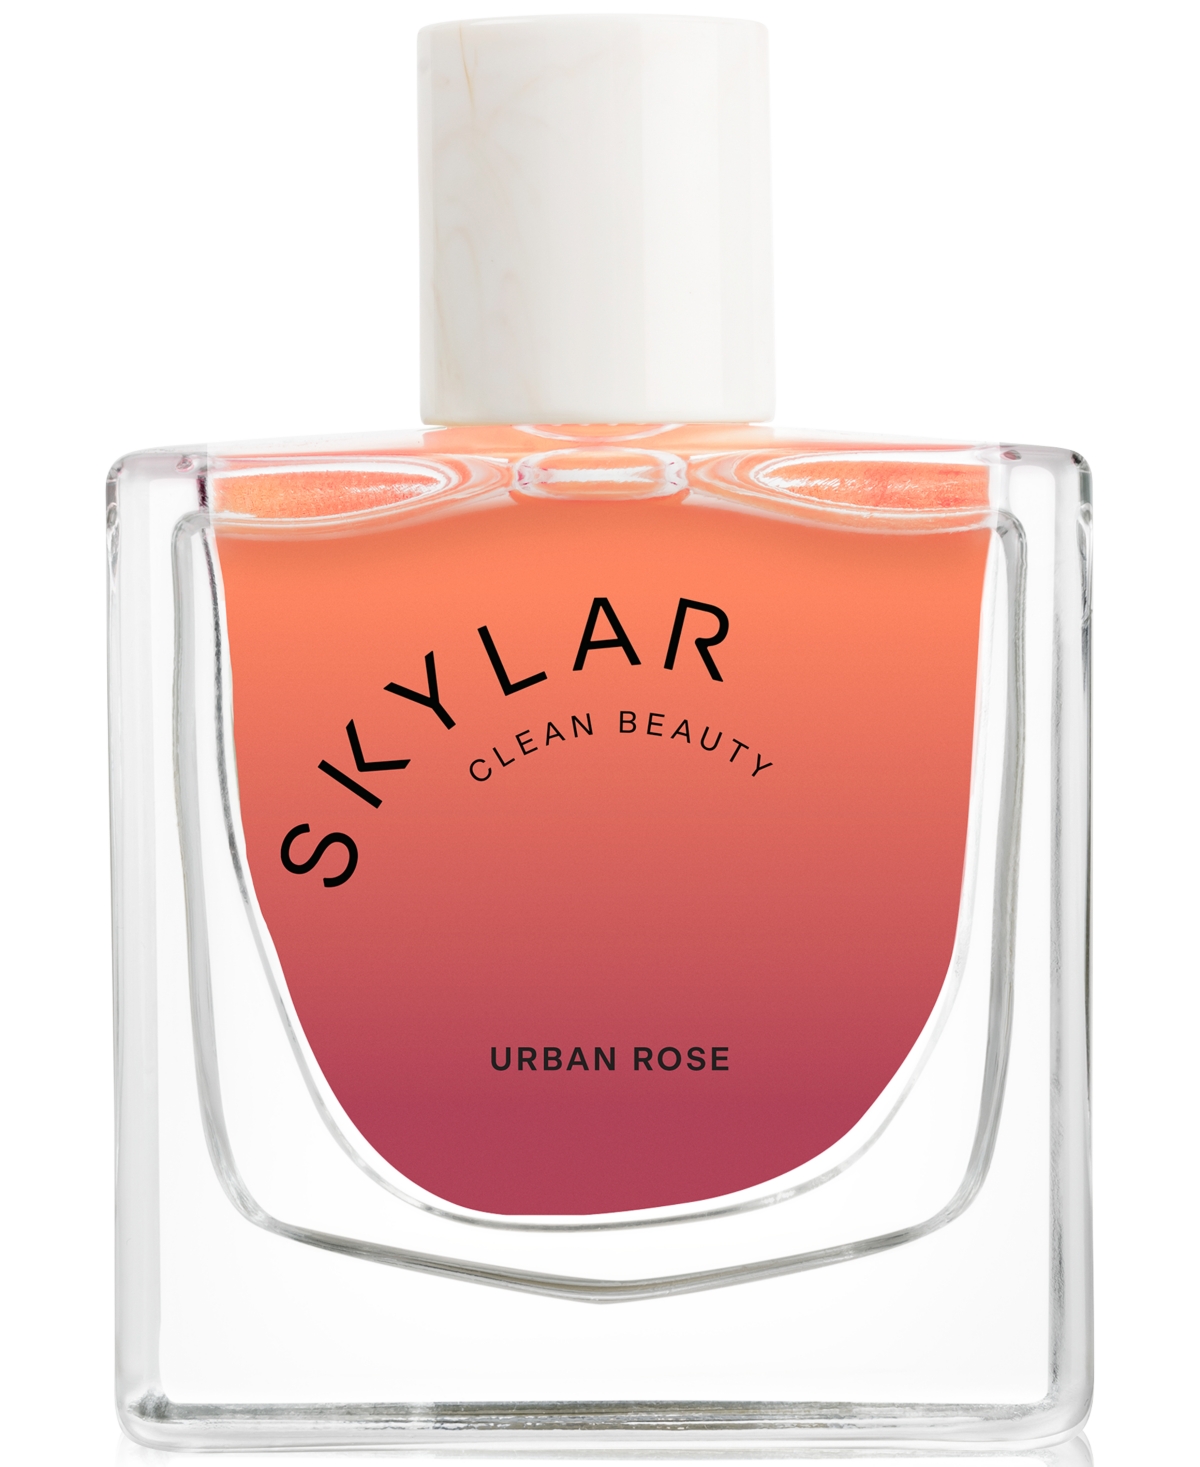 Skylar Urban Rose Eau De Parfum, 1.7 Oz.